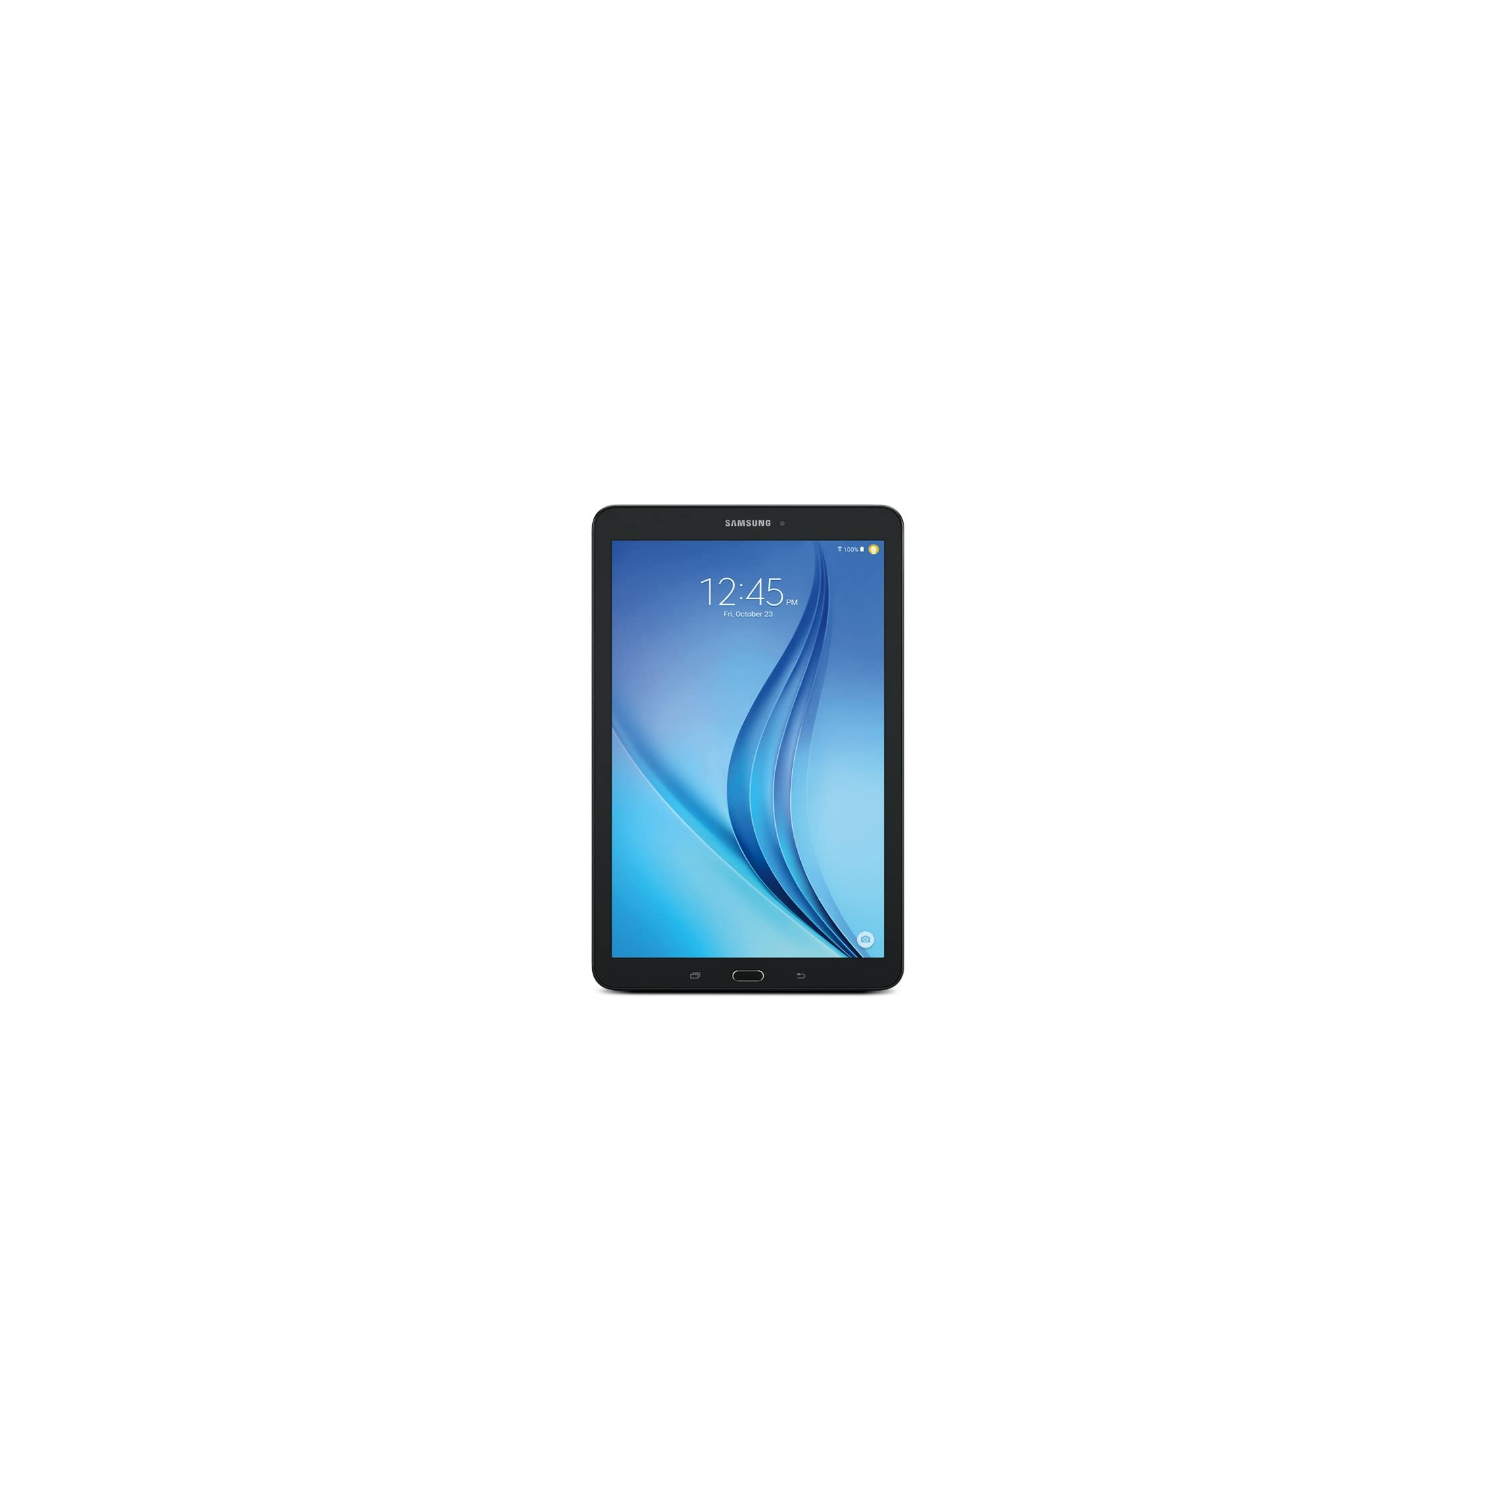 Samsung Galaxy Tab E 16GB 9.6-Inch Tablet SM-T560 - Black